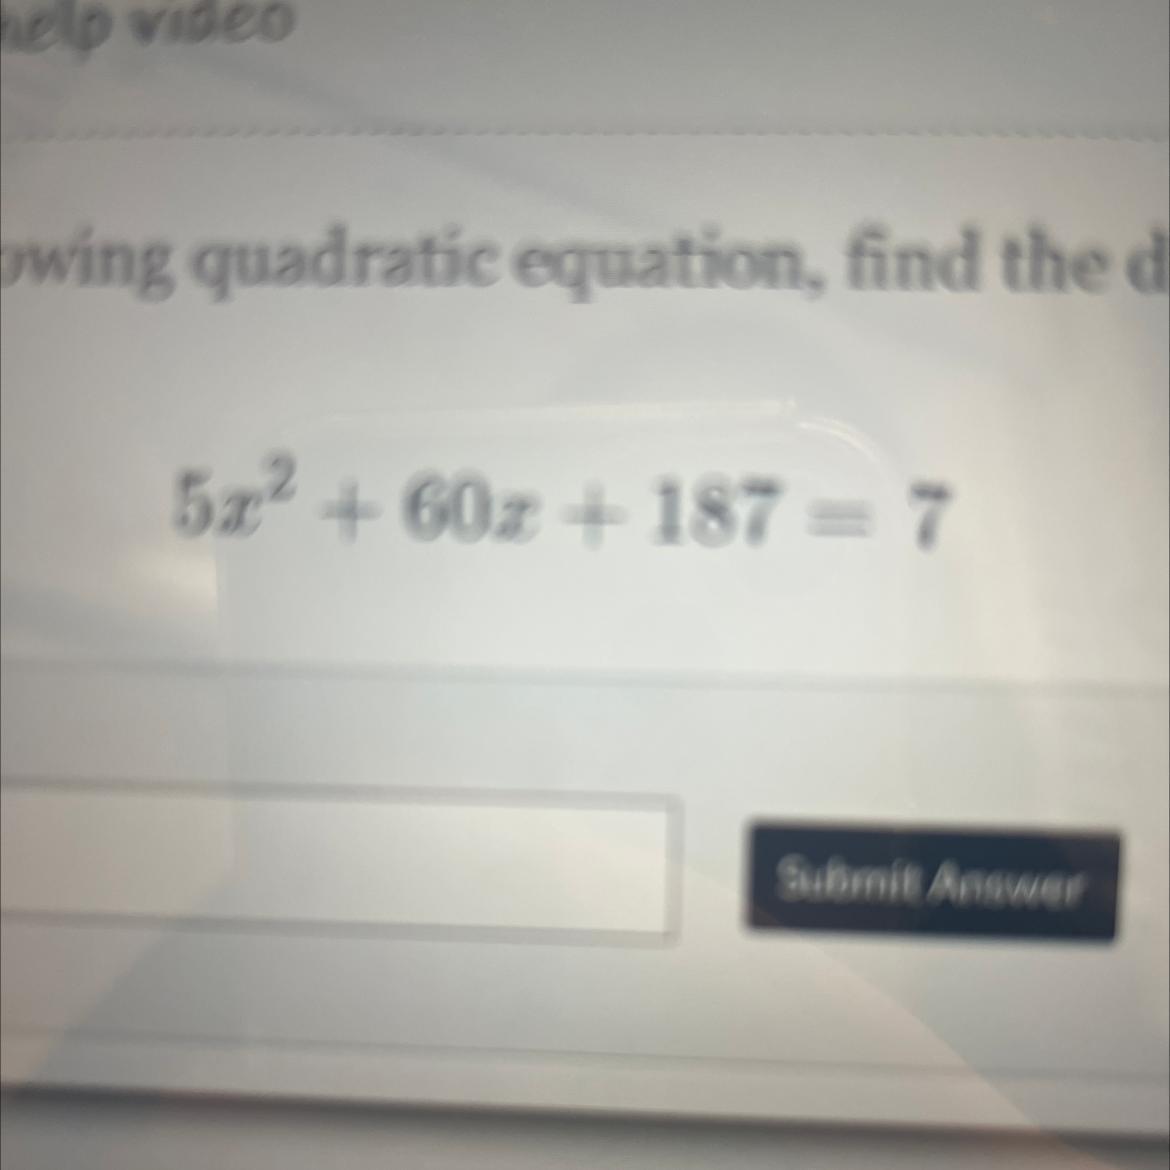 Following Quadratic Equation, Find The 5 X+60 X+187=7